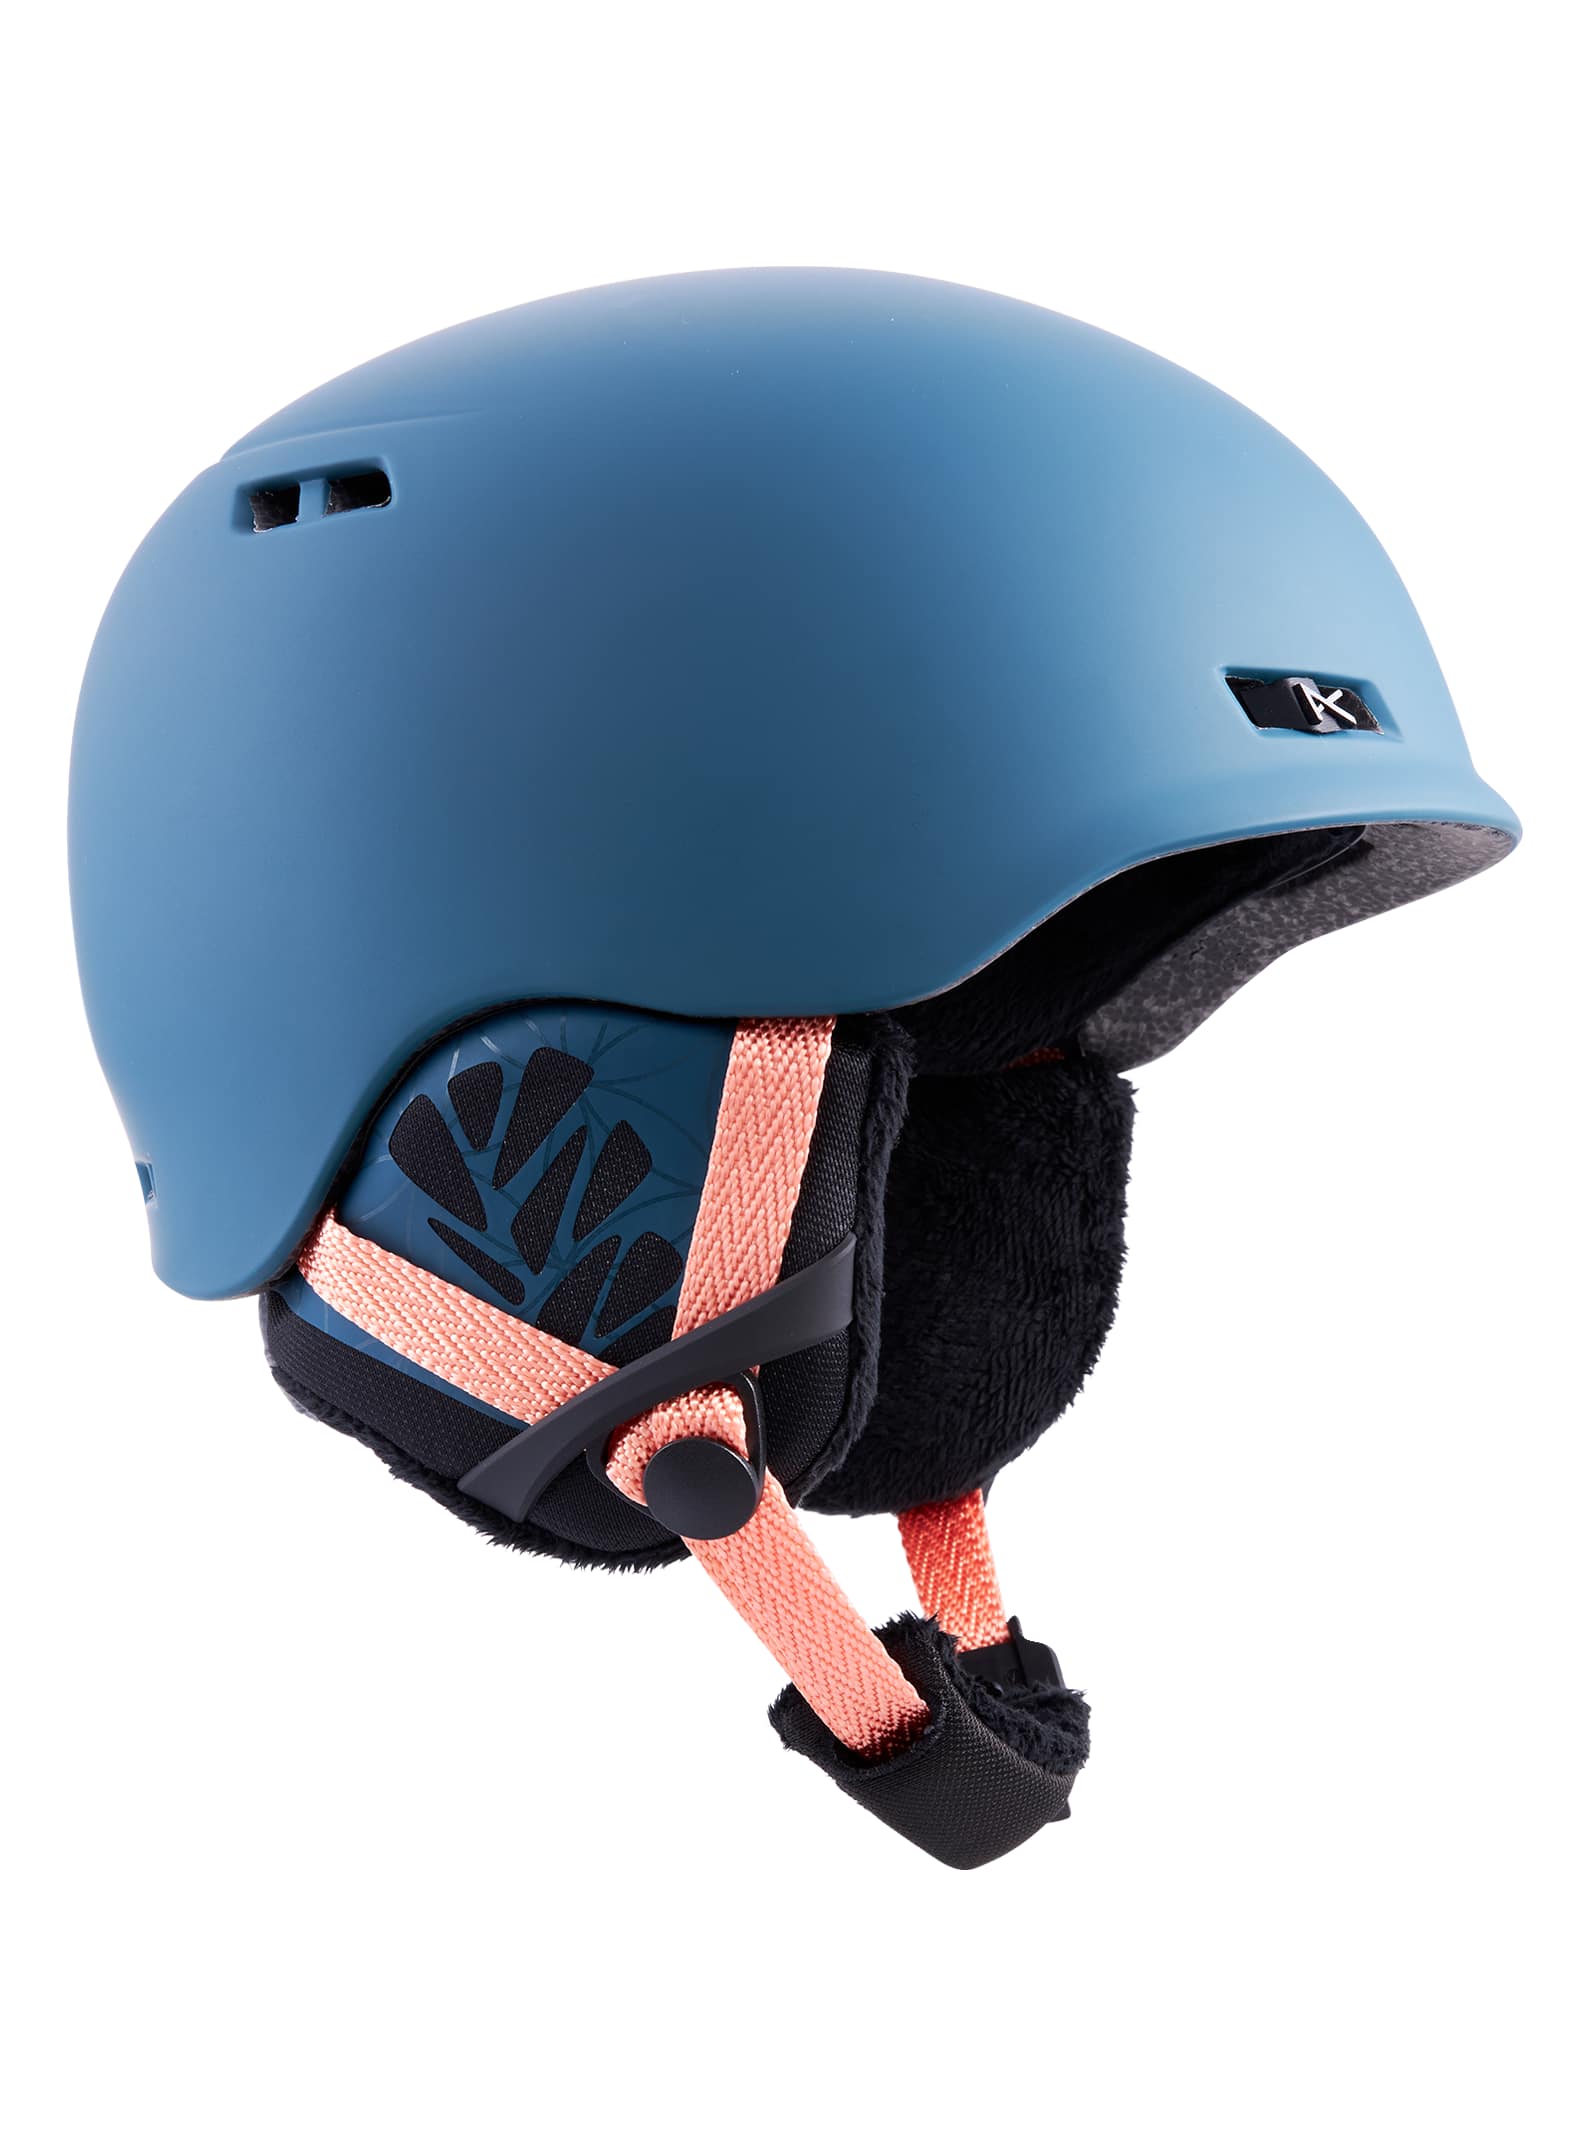 Anon Women's Aera Snowboarding Helmet Empress Teal Small 